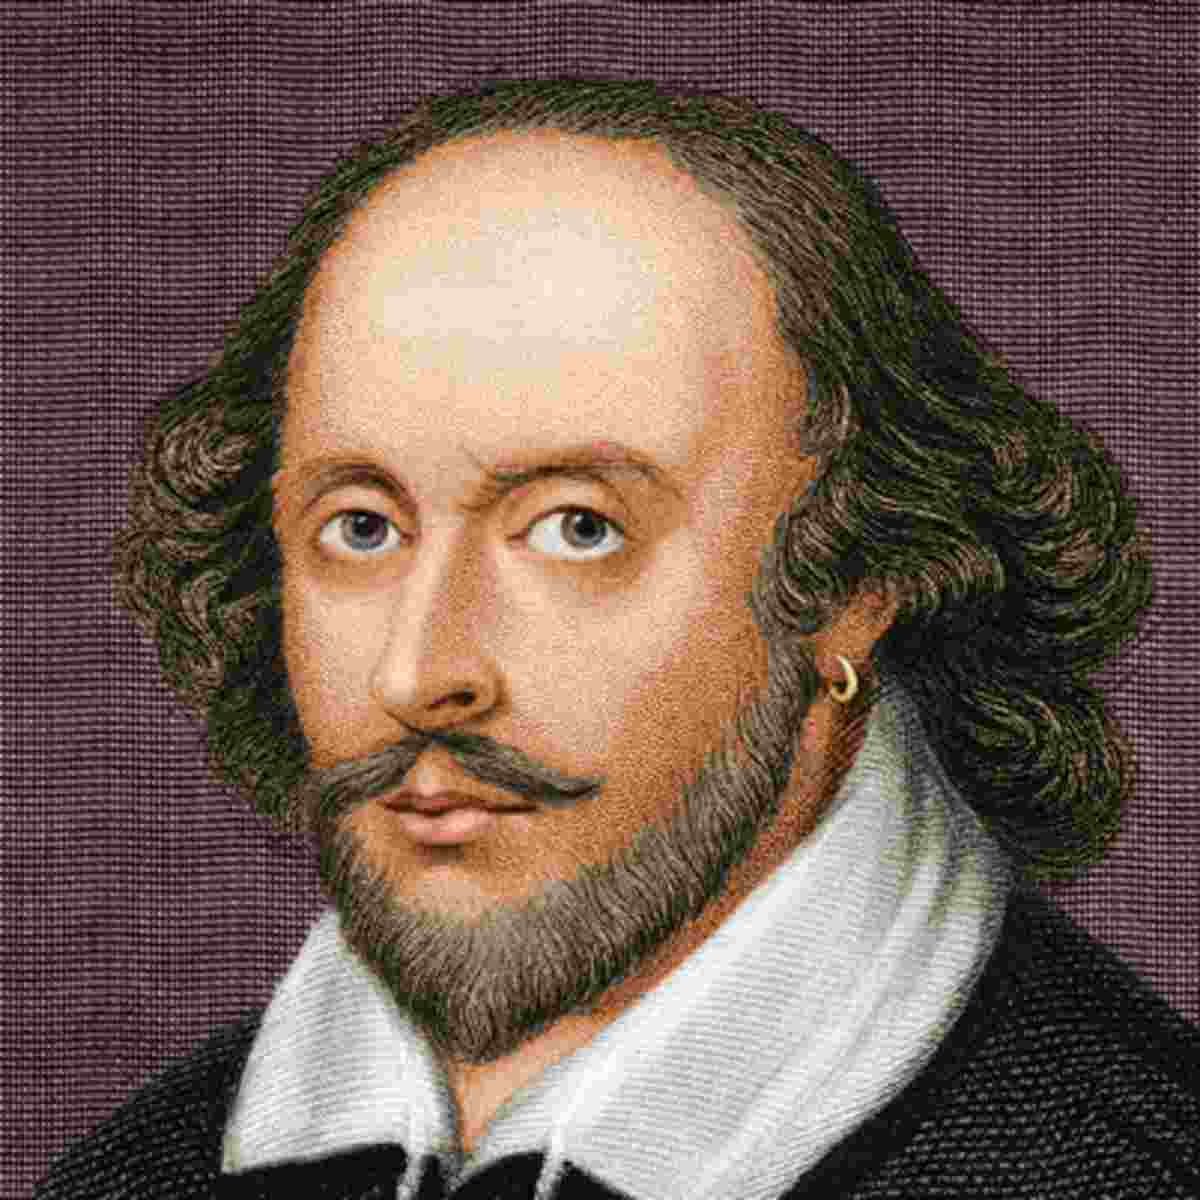 William Shakespeare Biography World Biodata Famous People Biography